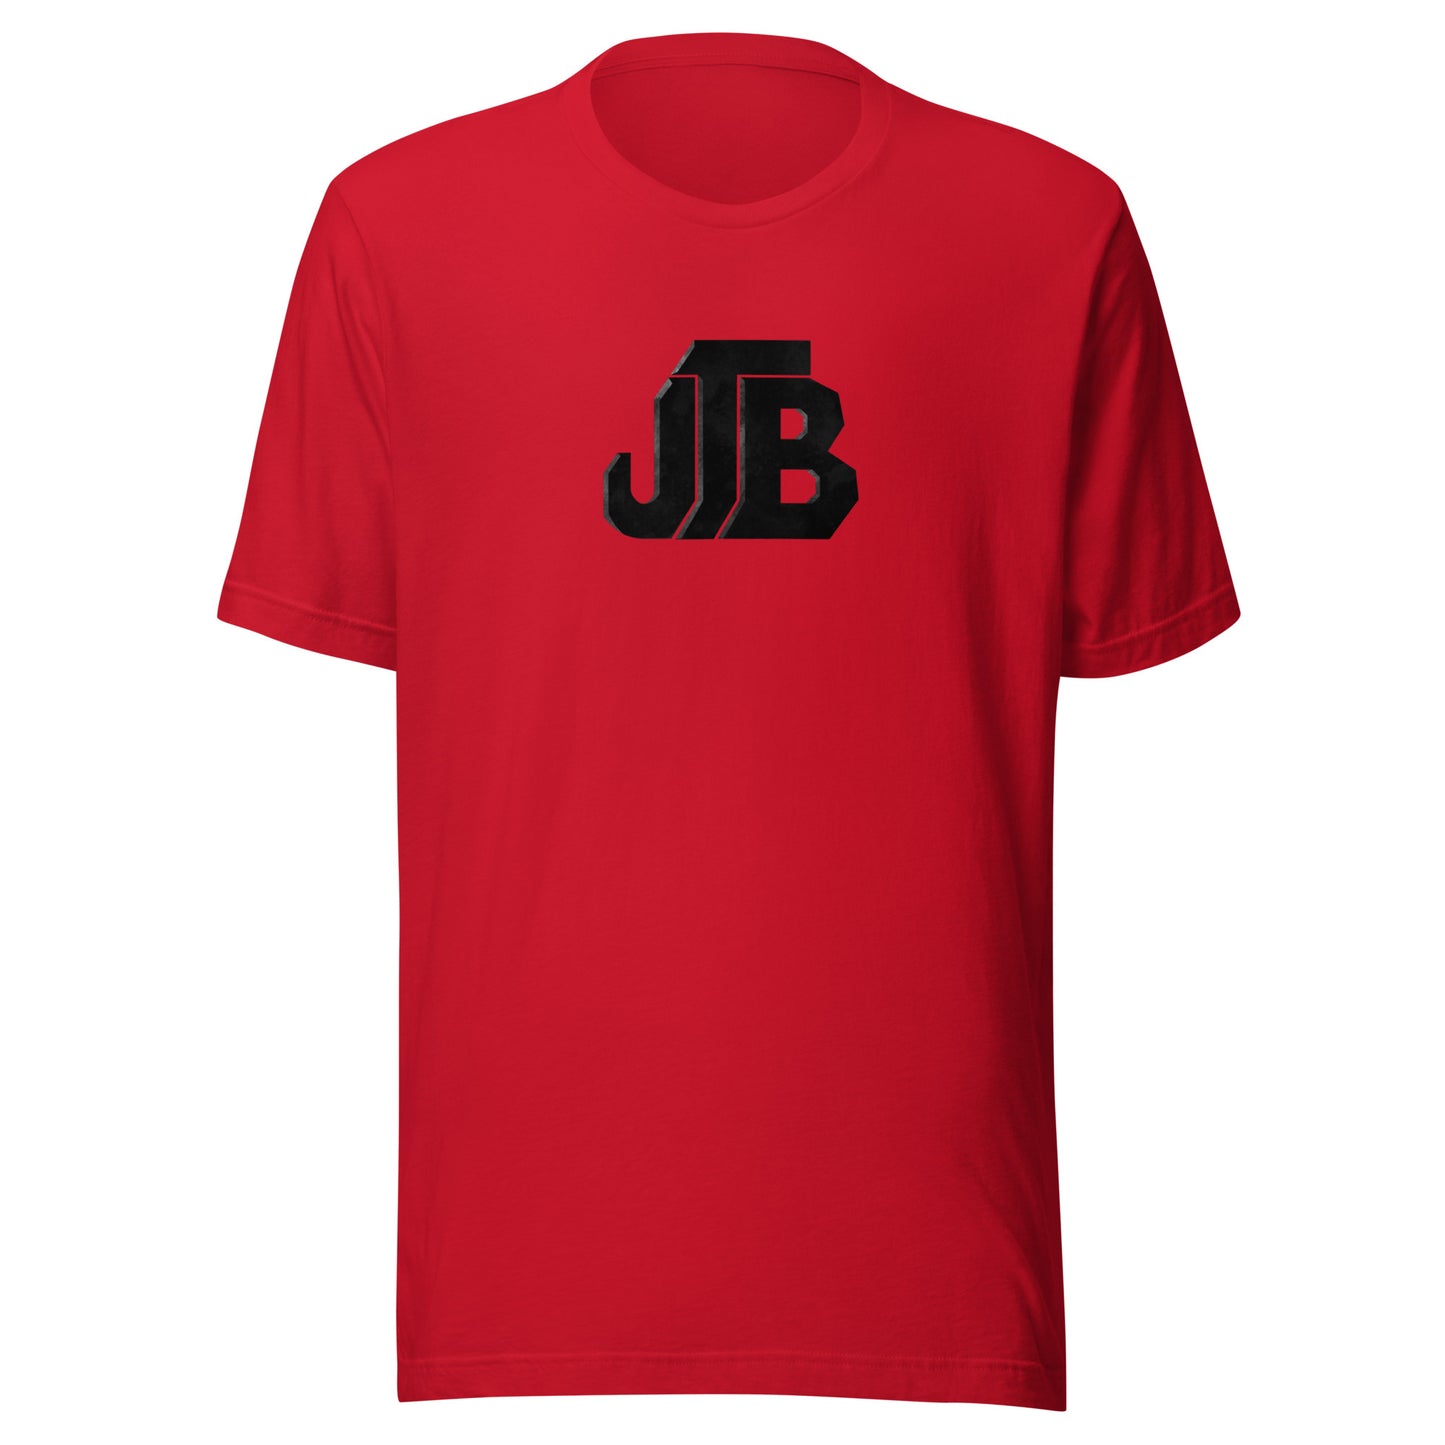 Jonny The Band - T-Shirt with Logo